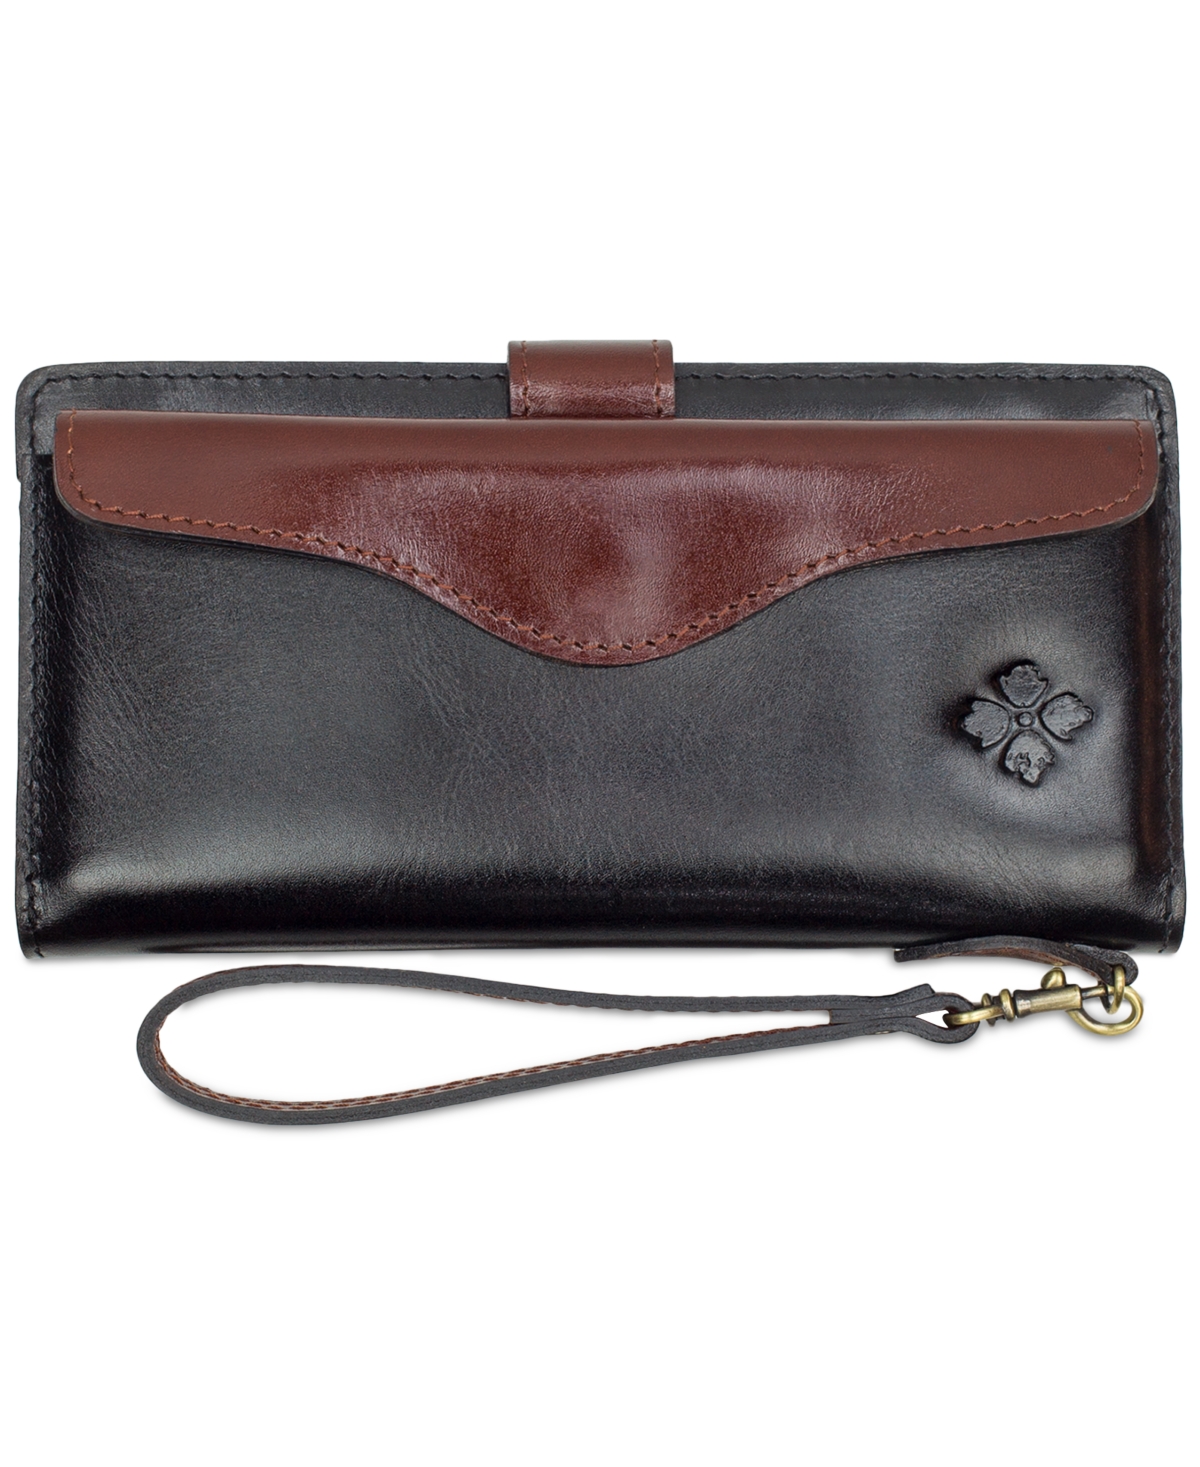 Valentia Ii Colorblocked Leather Wallet - British Tan/Black